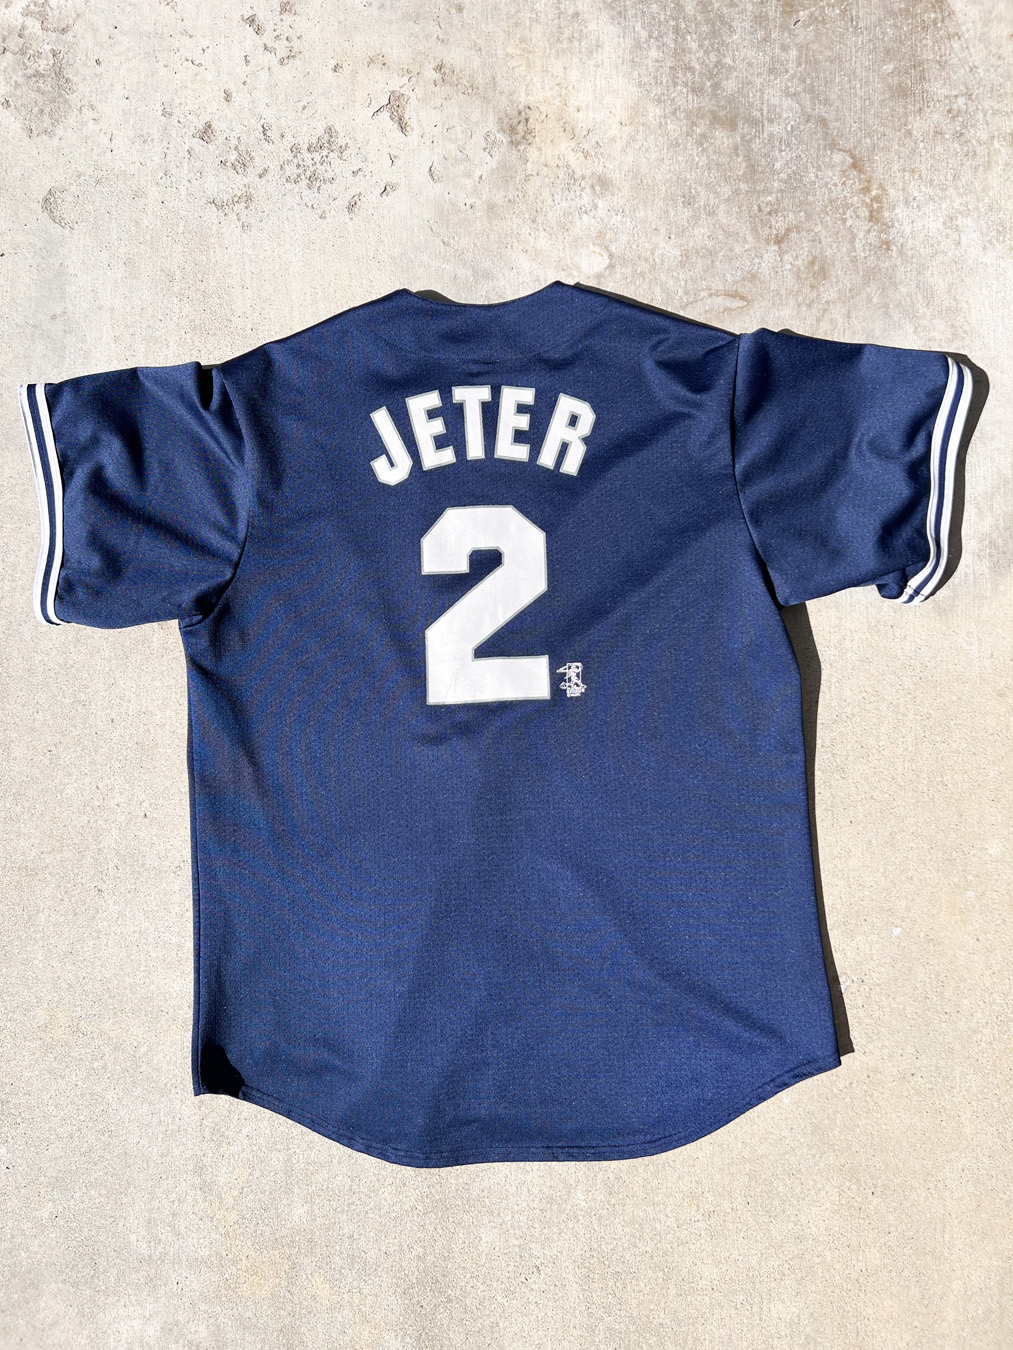 Yankees Derek Jeter Jersey / 00s MLB Baseball / Vintage NYC 